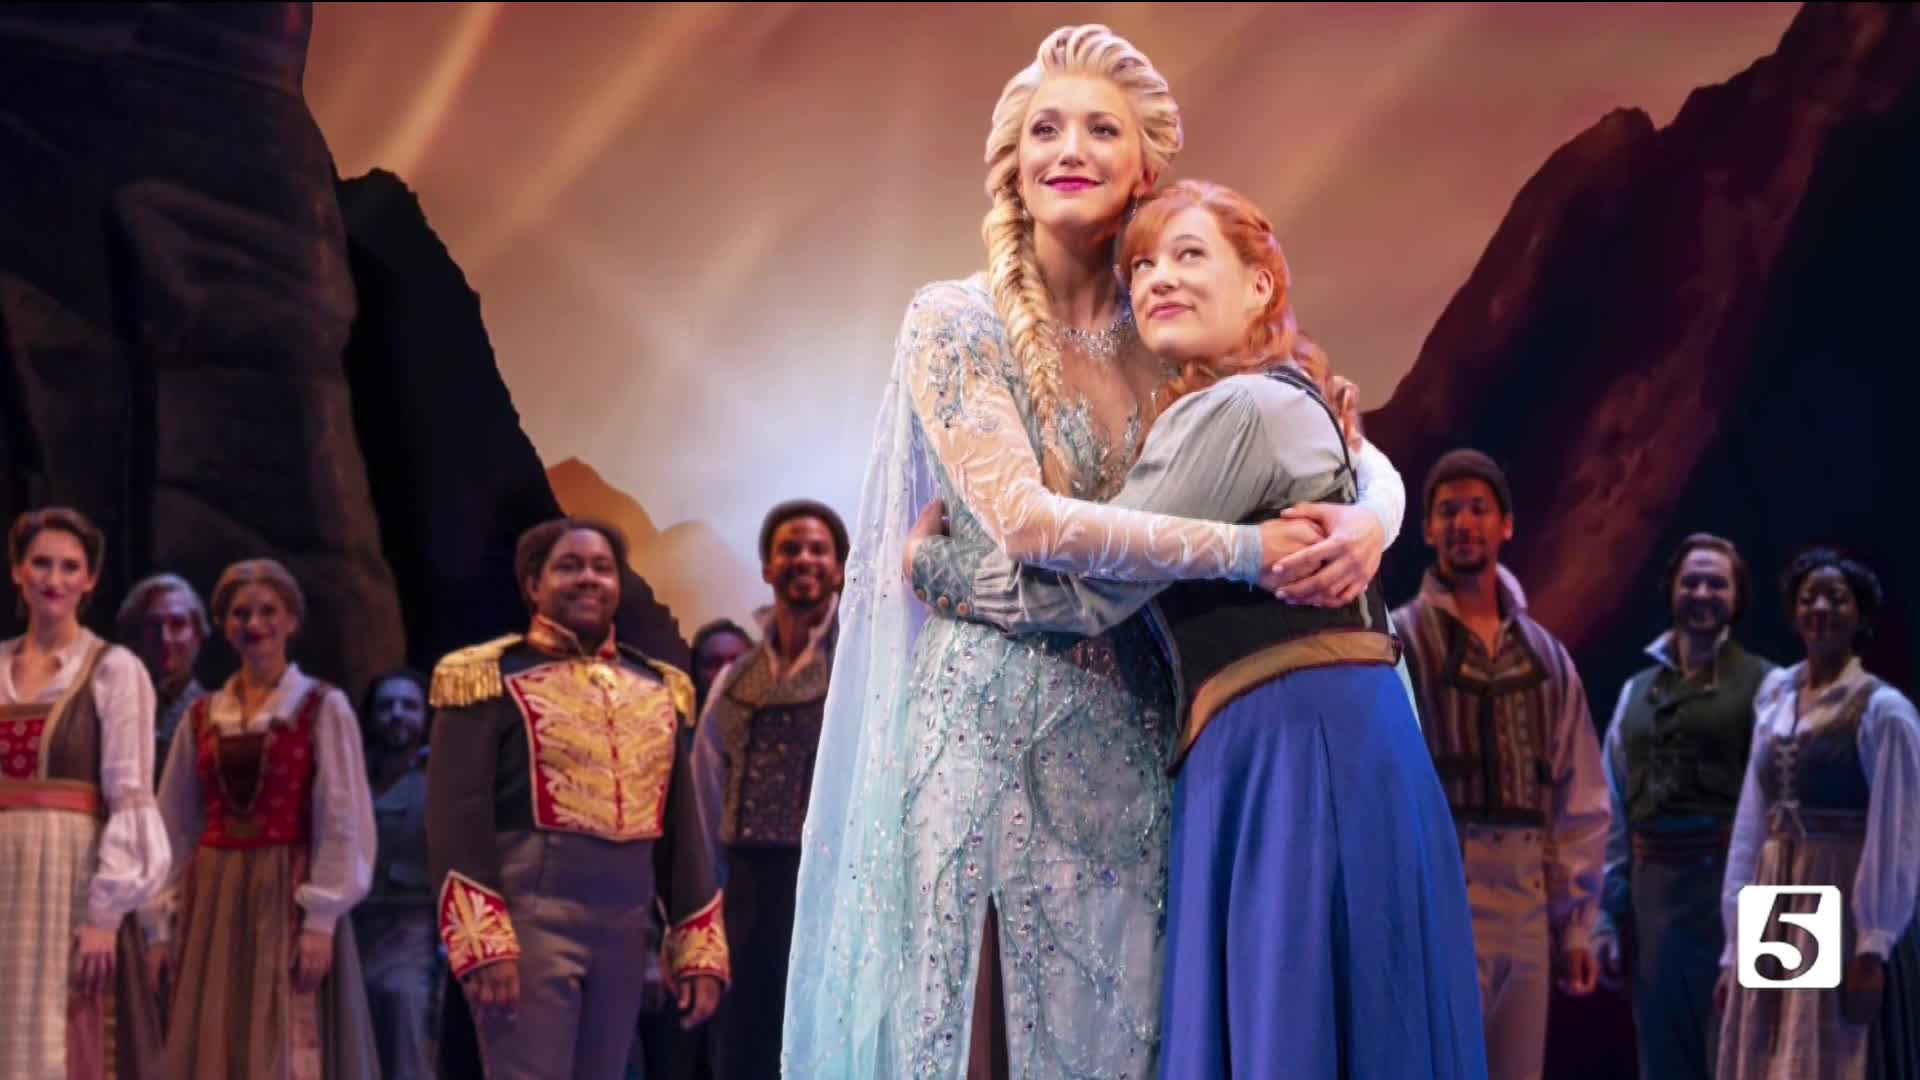 Disney’s ‘FROZEN' makes Broadway musical debut in Nashville at TPAC